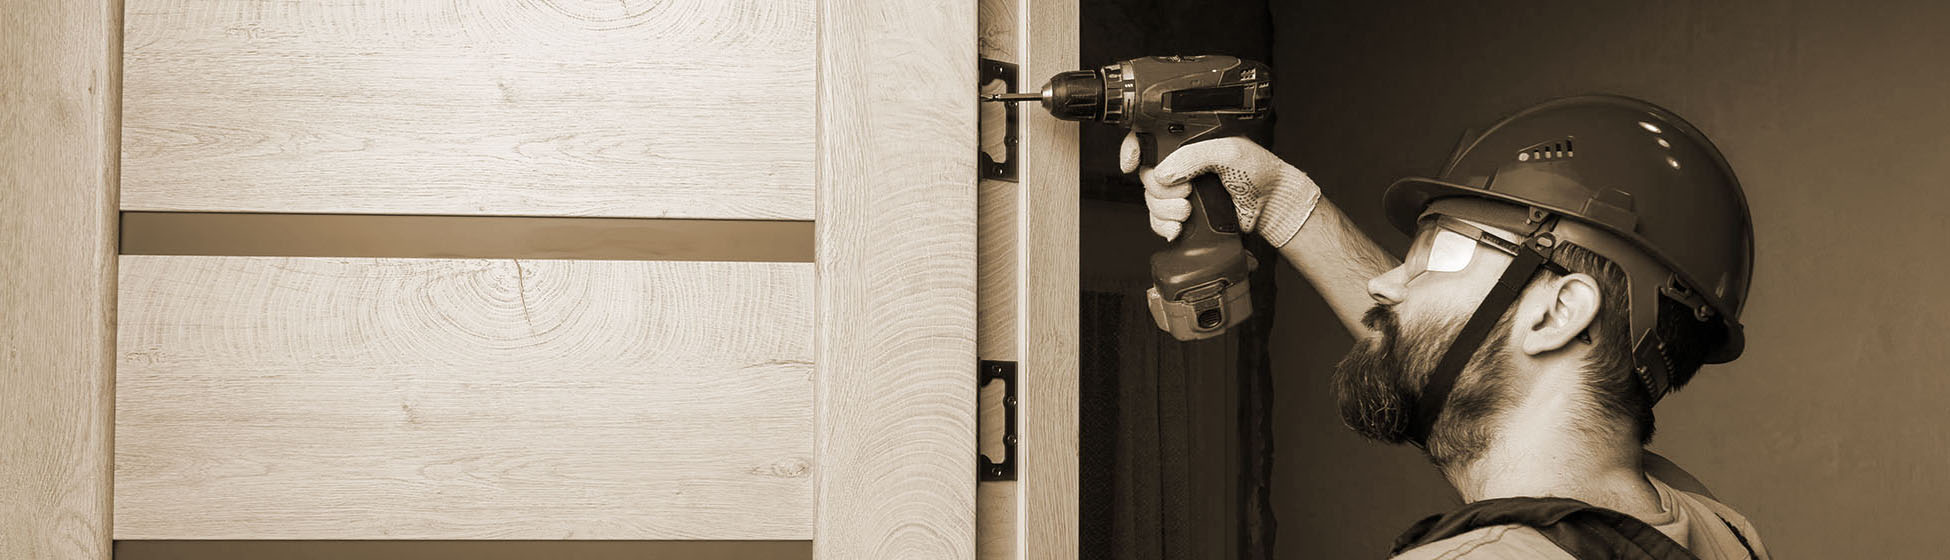 Reparer bas de porte en bois pourri